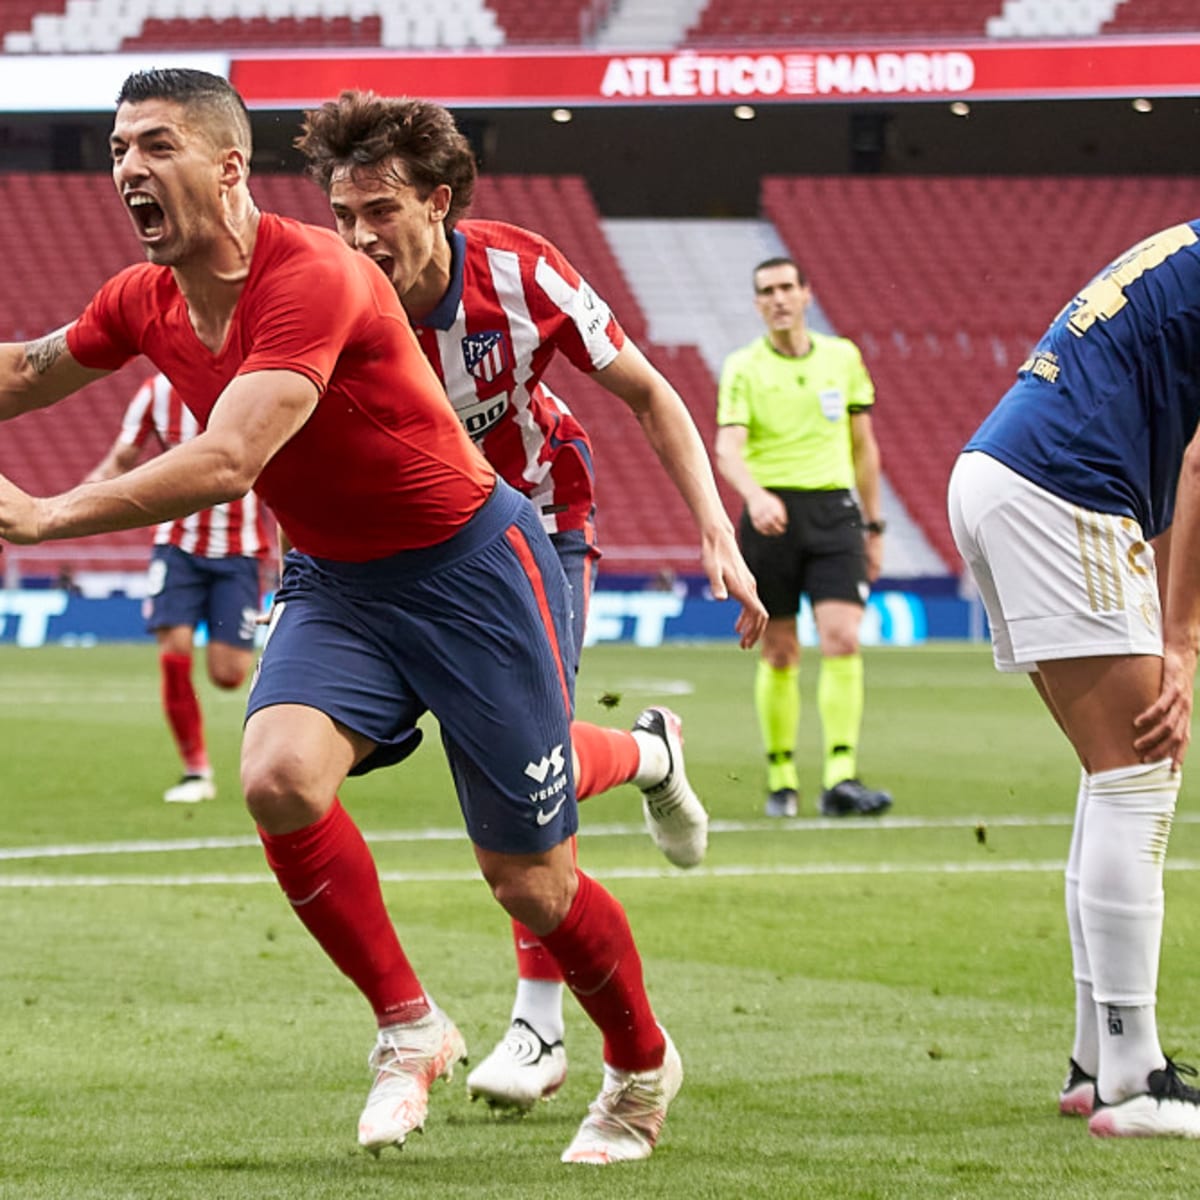 Luis Suarez's last hurrah at Atletico Madrid - The Athletic